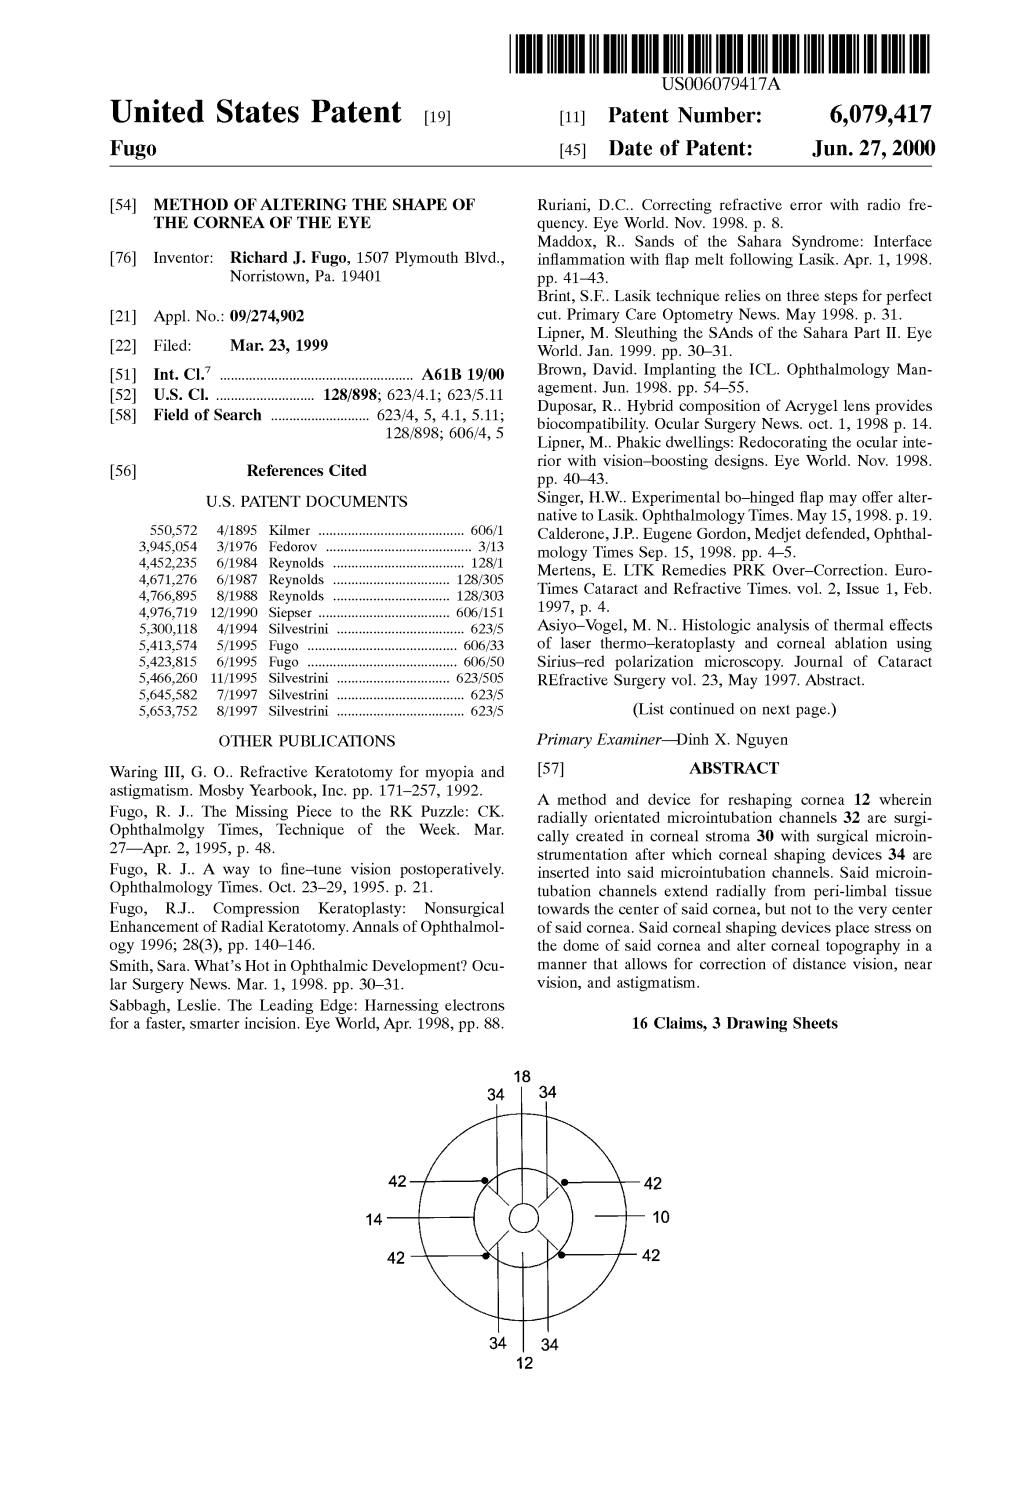 United States Patent (19) 11 Patent Number: 6,079,417 Fugo (45) Date of Patent: Jun